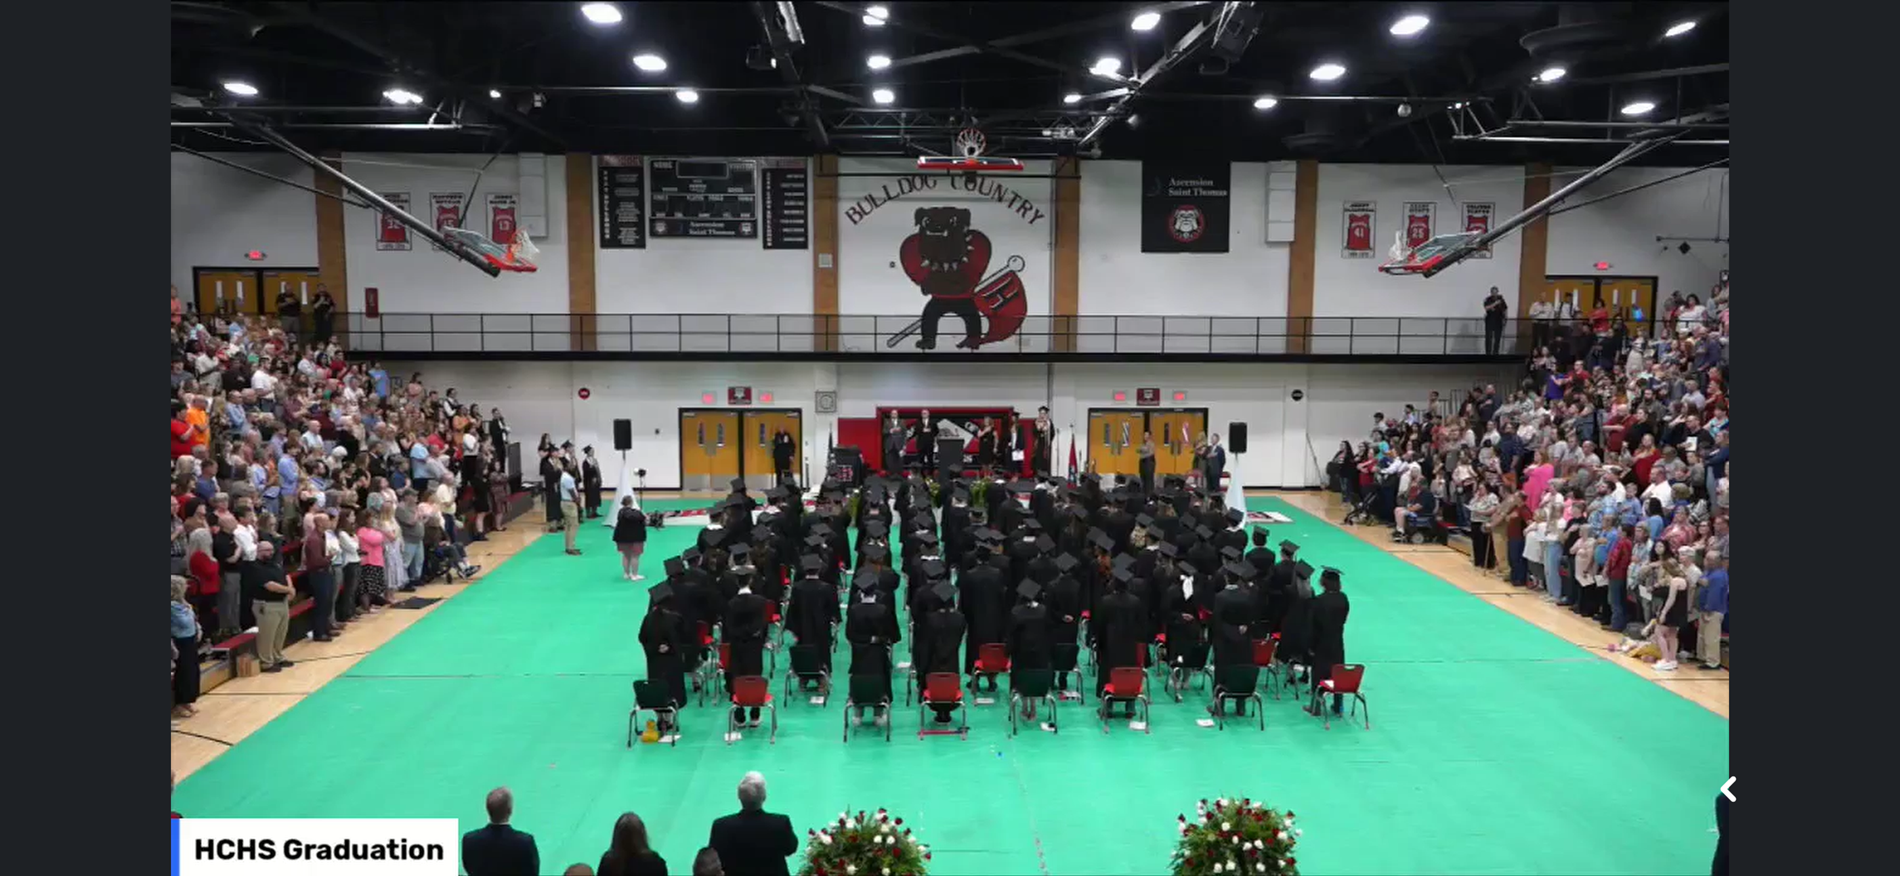 HCHS Graduation Ceremony